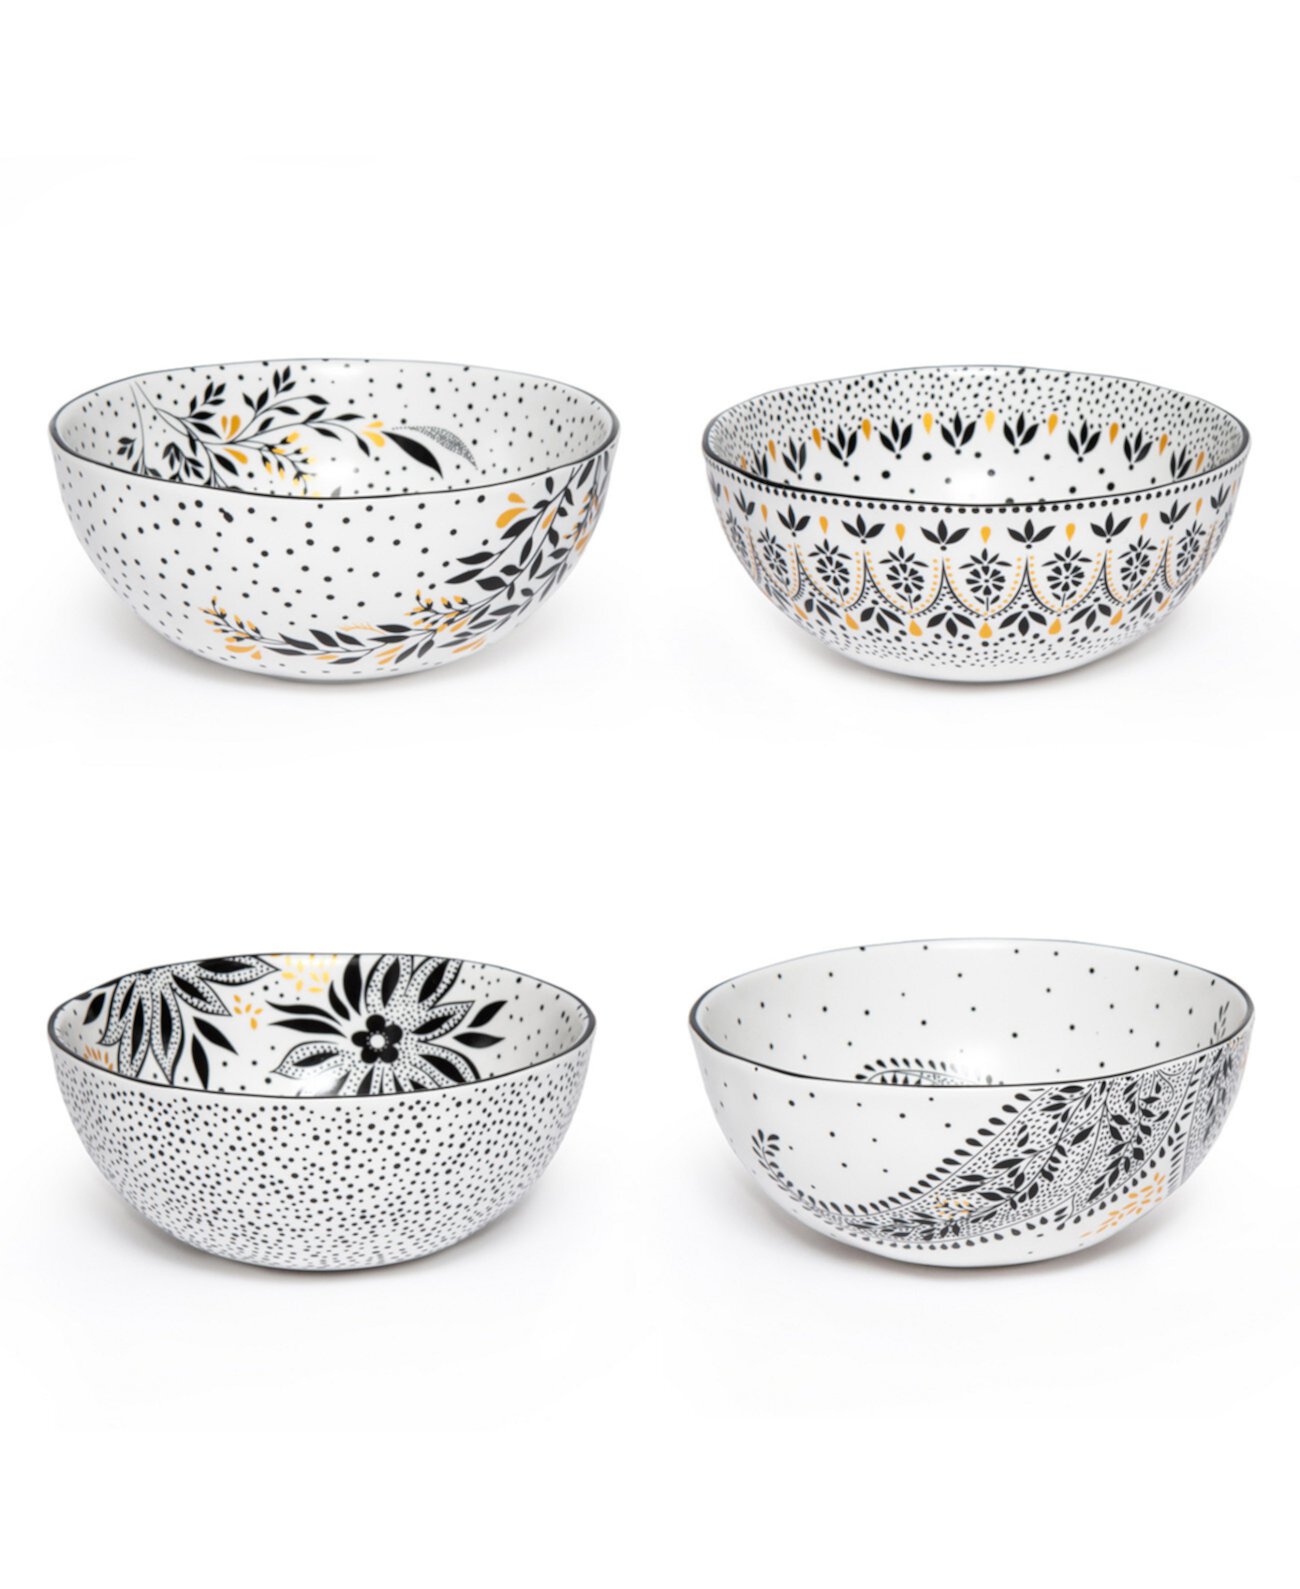 Sara Miller Artisanne Noir Cereal Bowls, Set of 4 Portmeirion